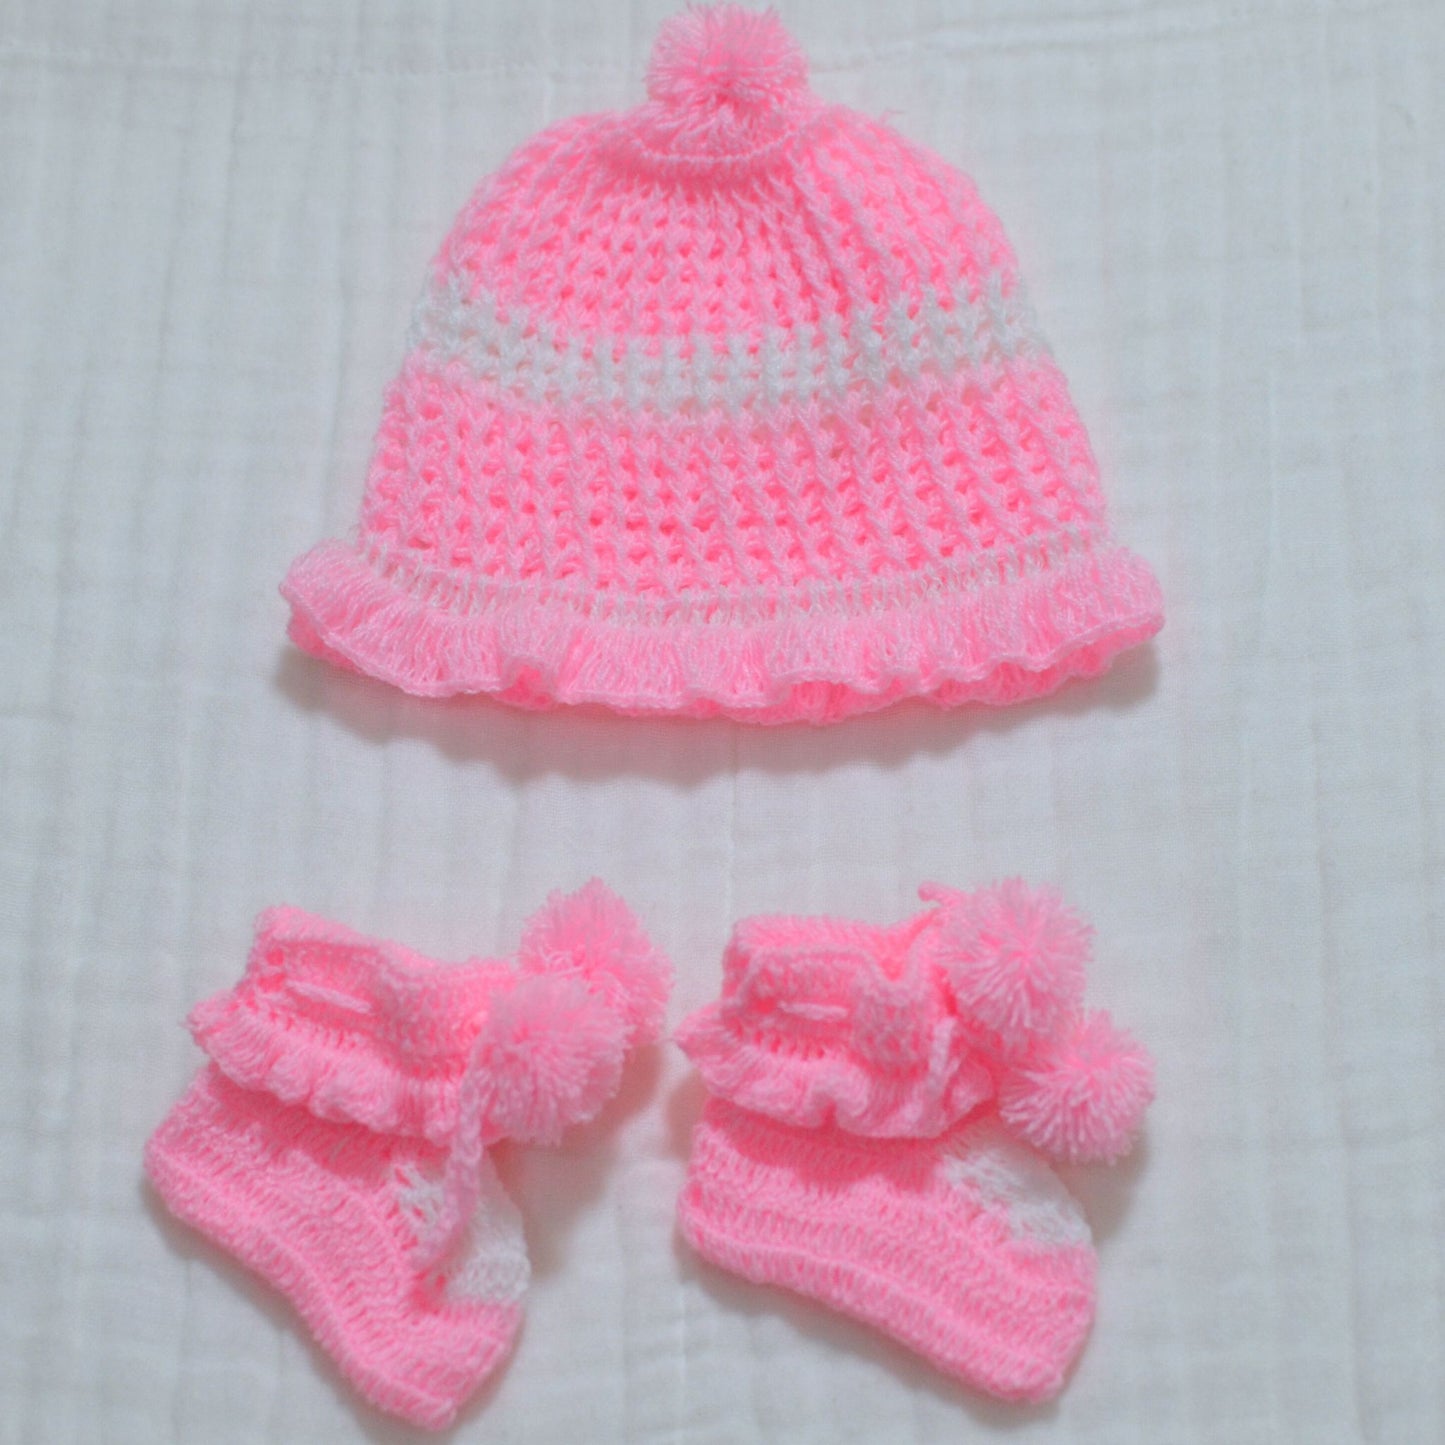 Knitted Handmade Baby Hat and Socks - Newborn Size